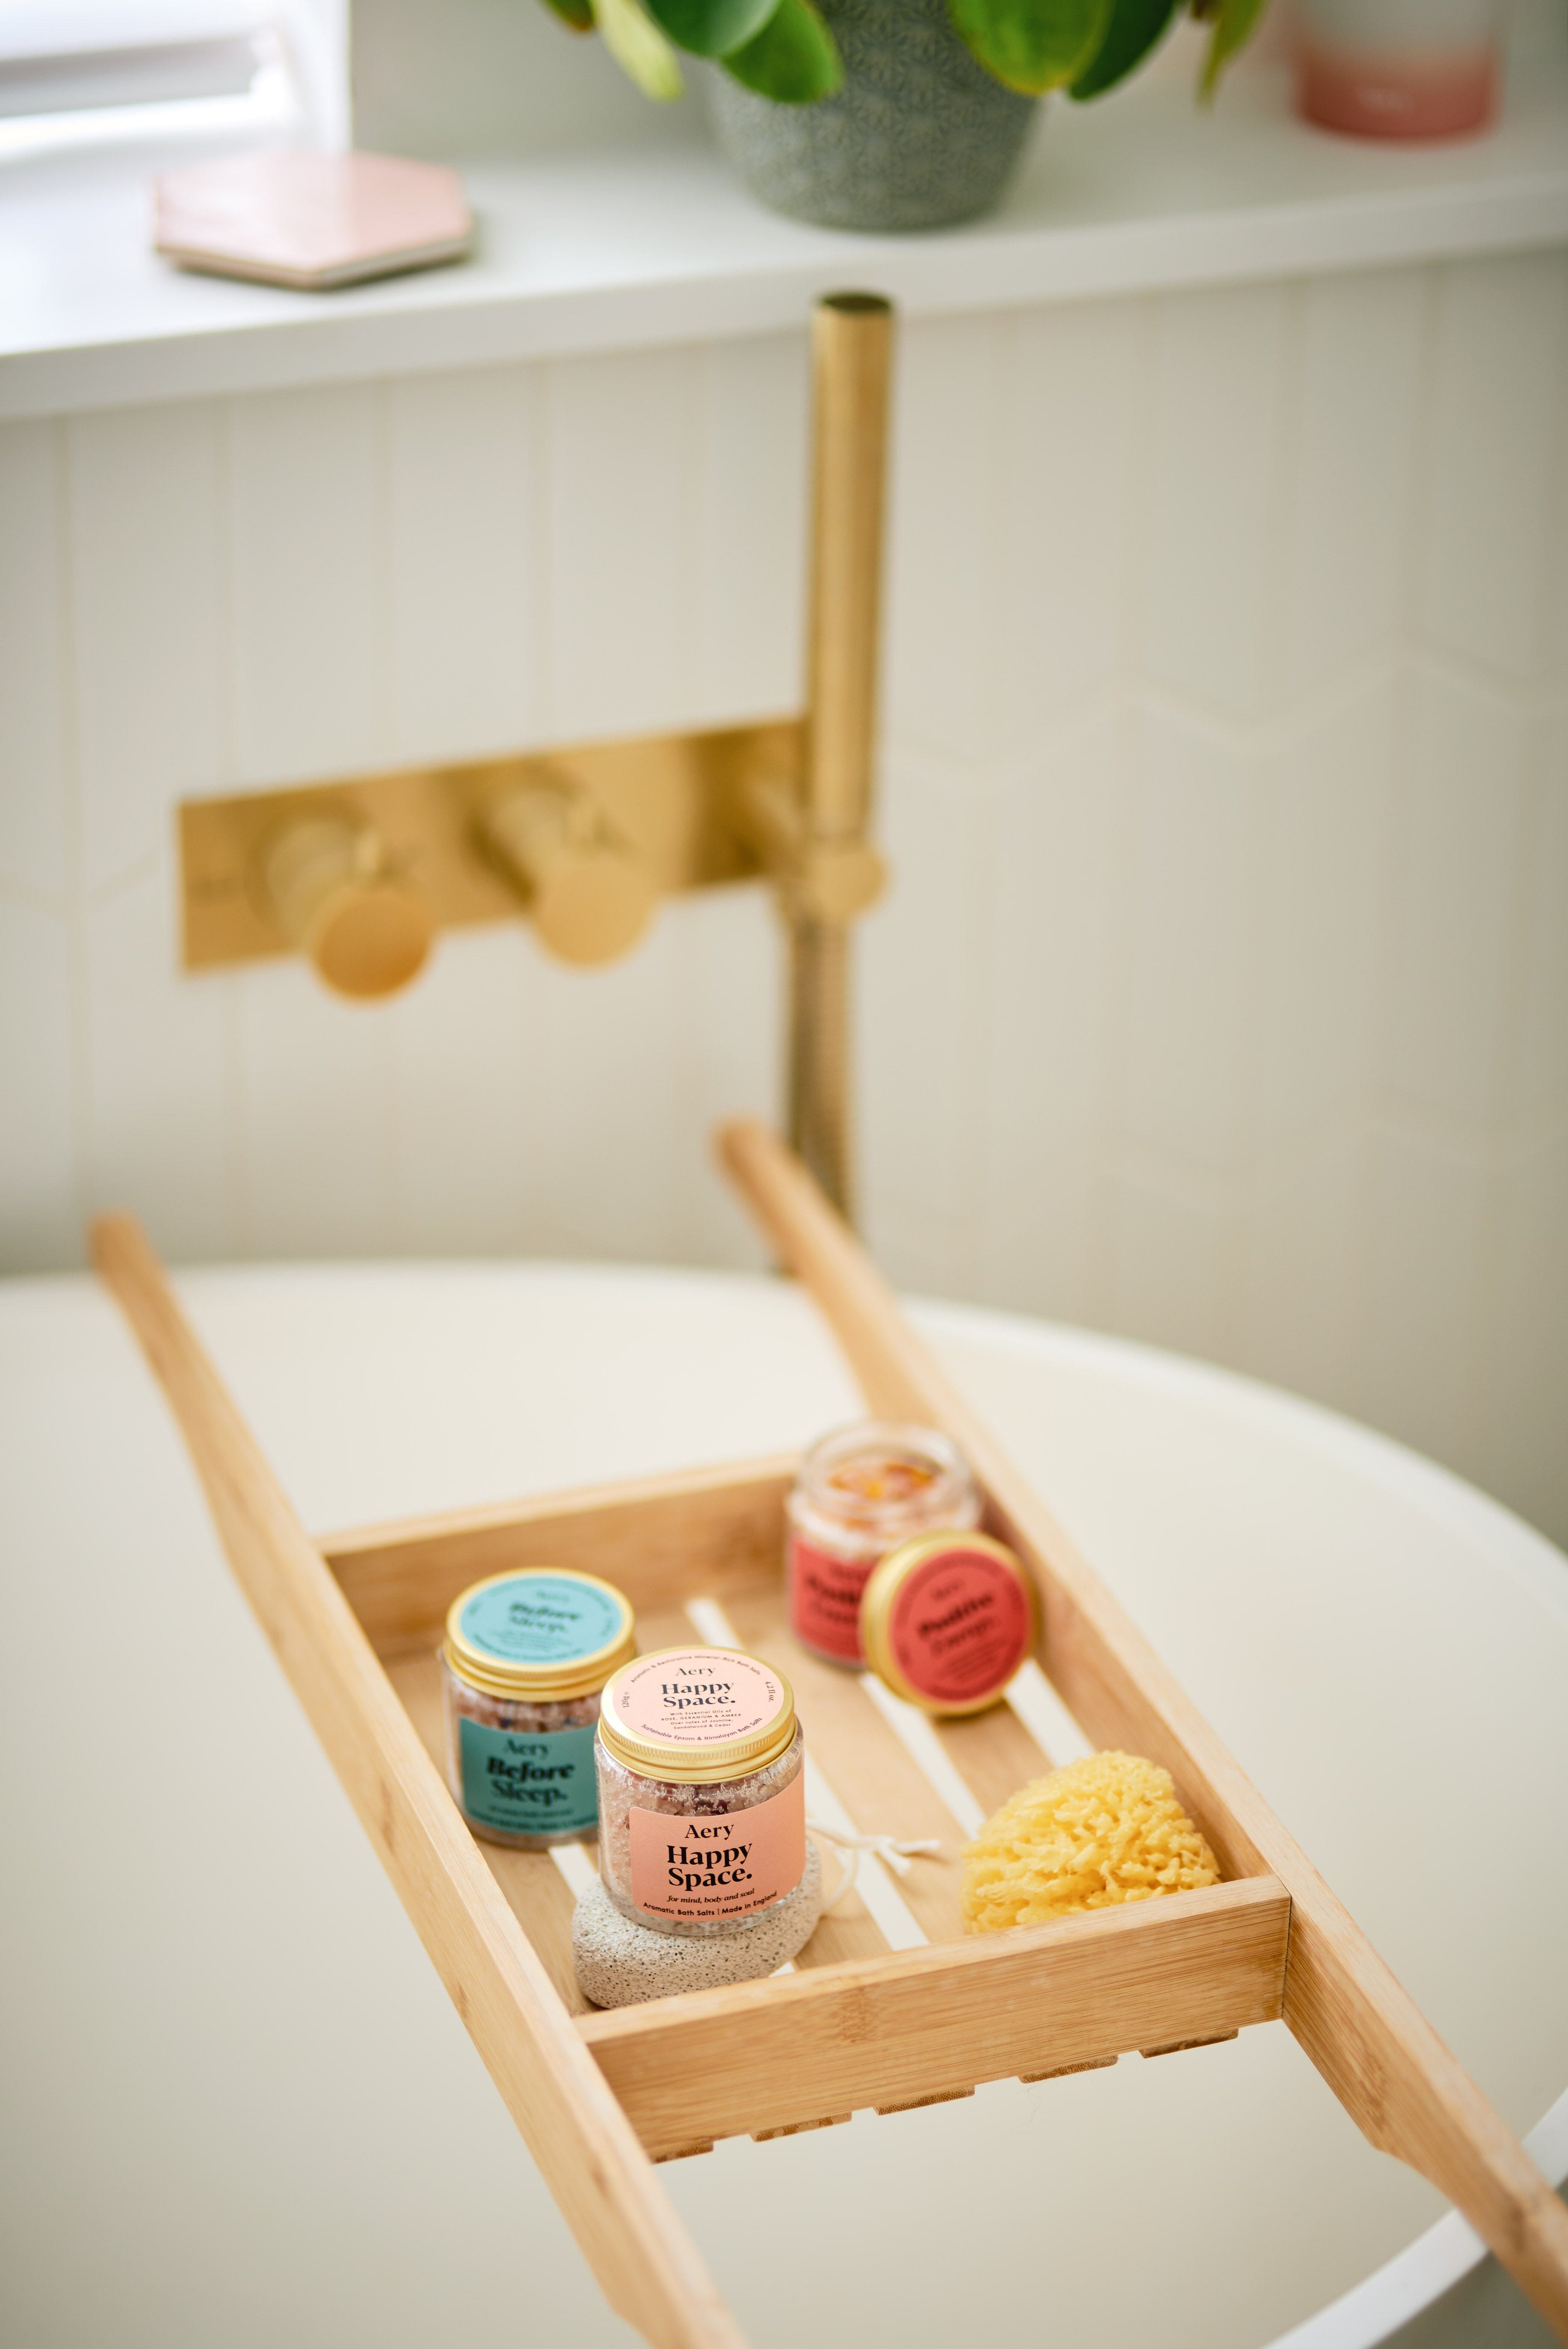 Positive Energy bath salts gift set by Aery displayed in bath tray  in bath room 